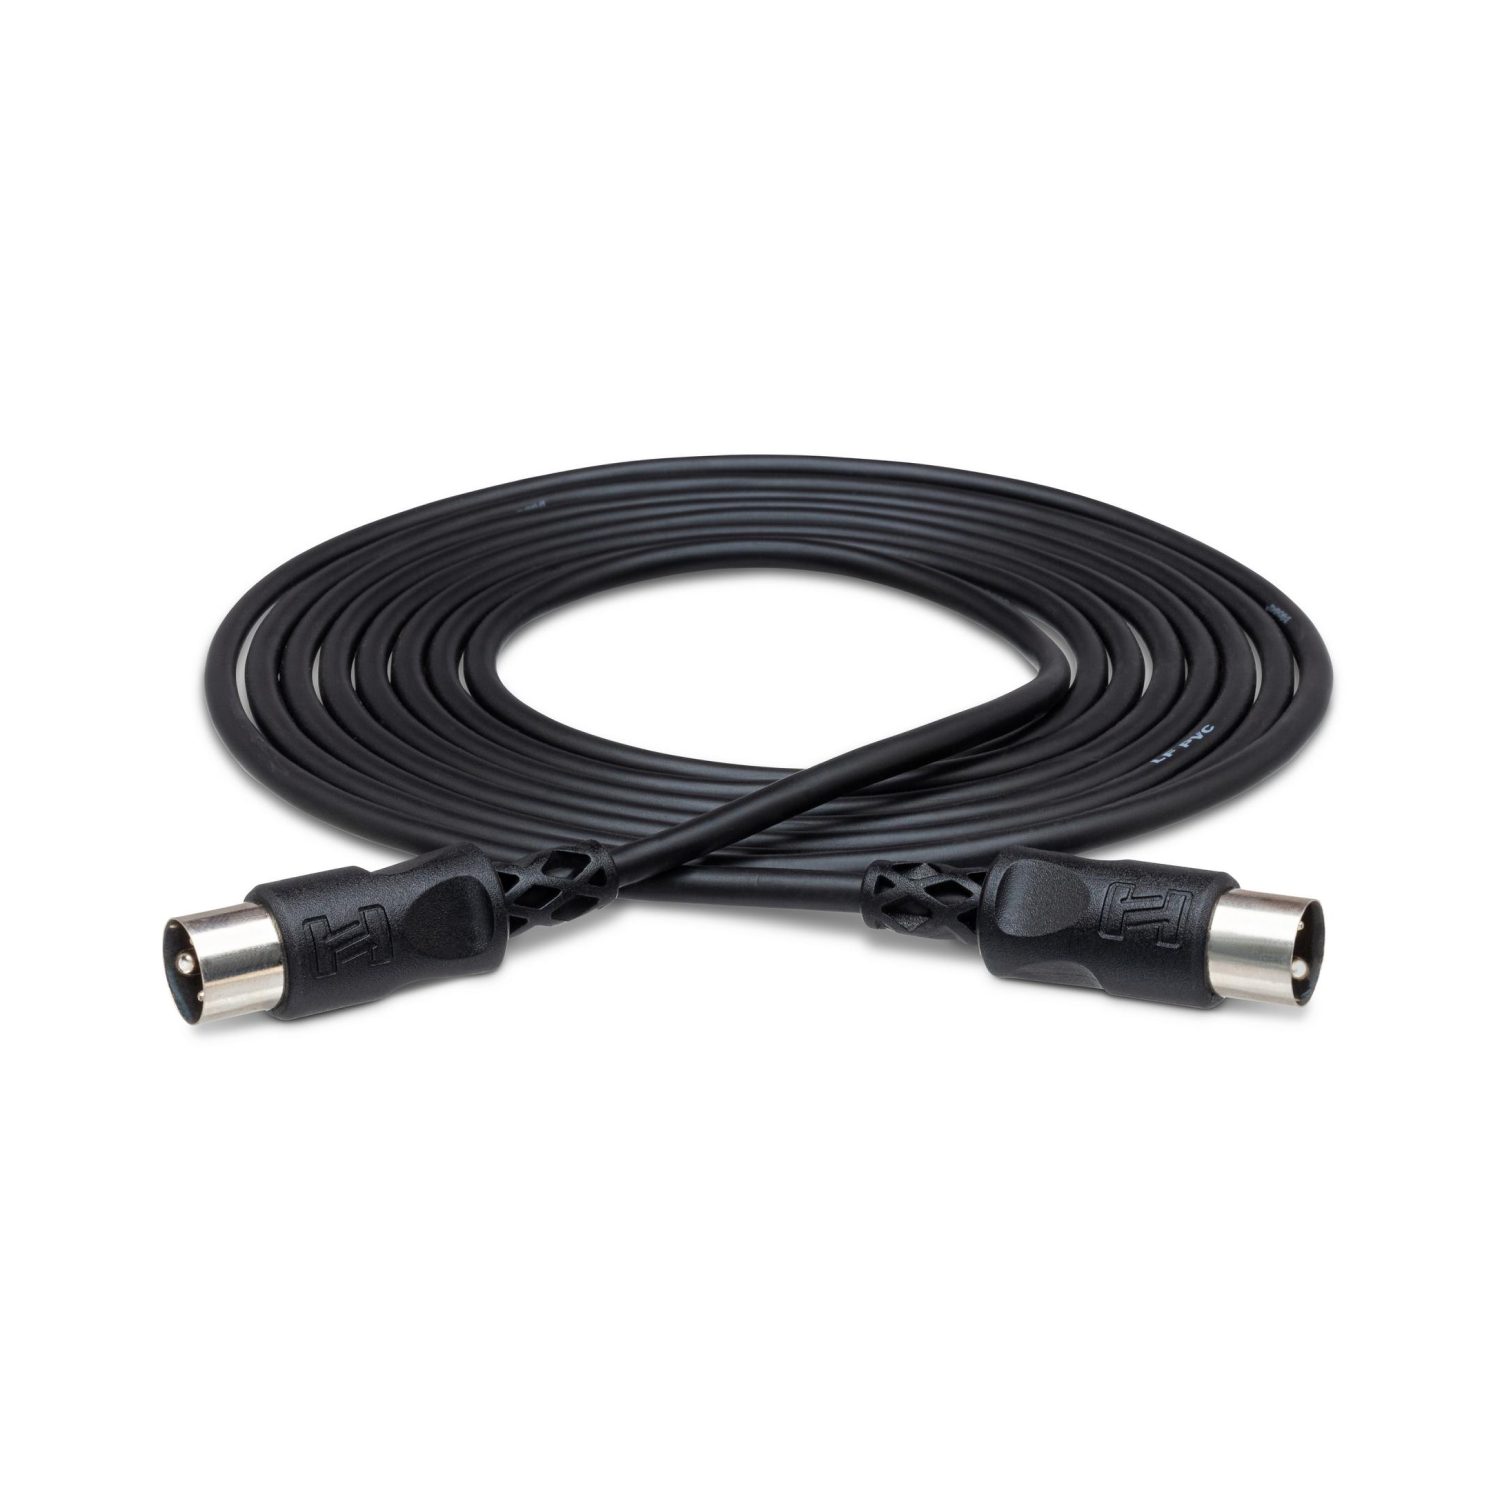 Hosa MIDI Cable 305BK